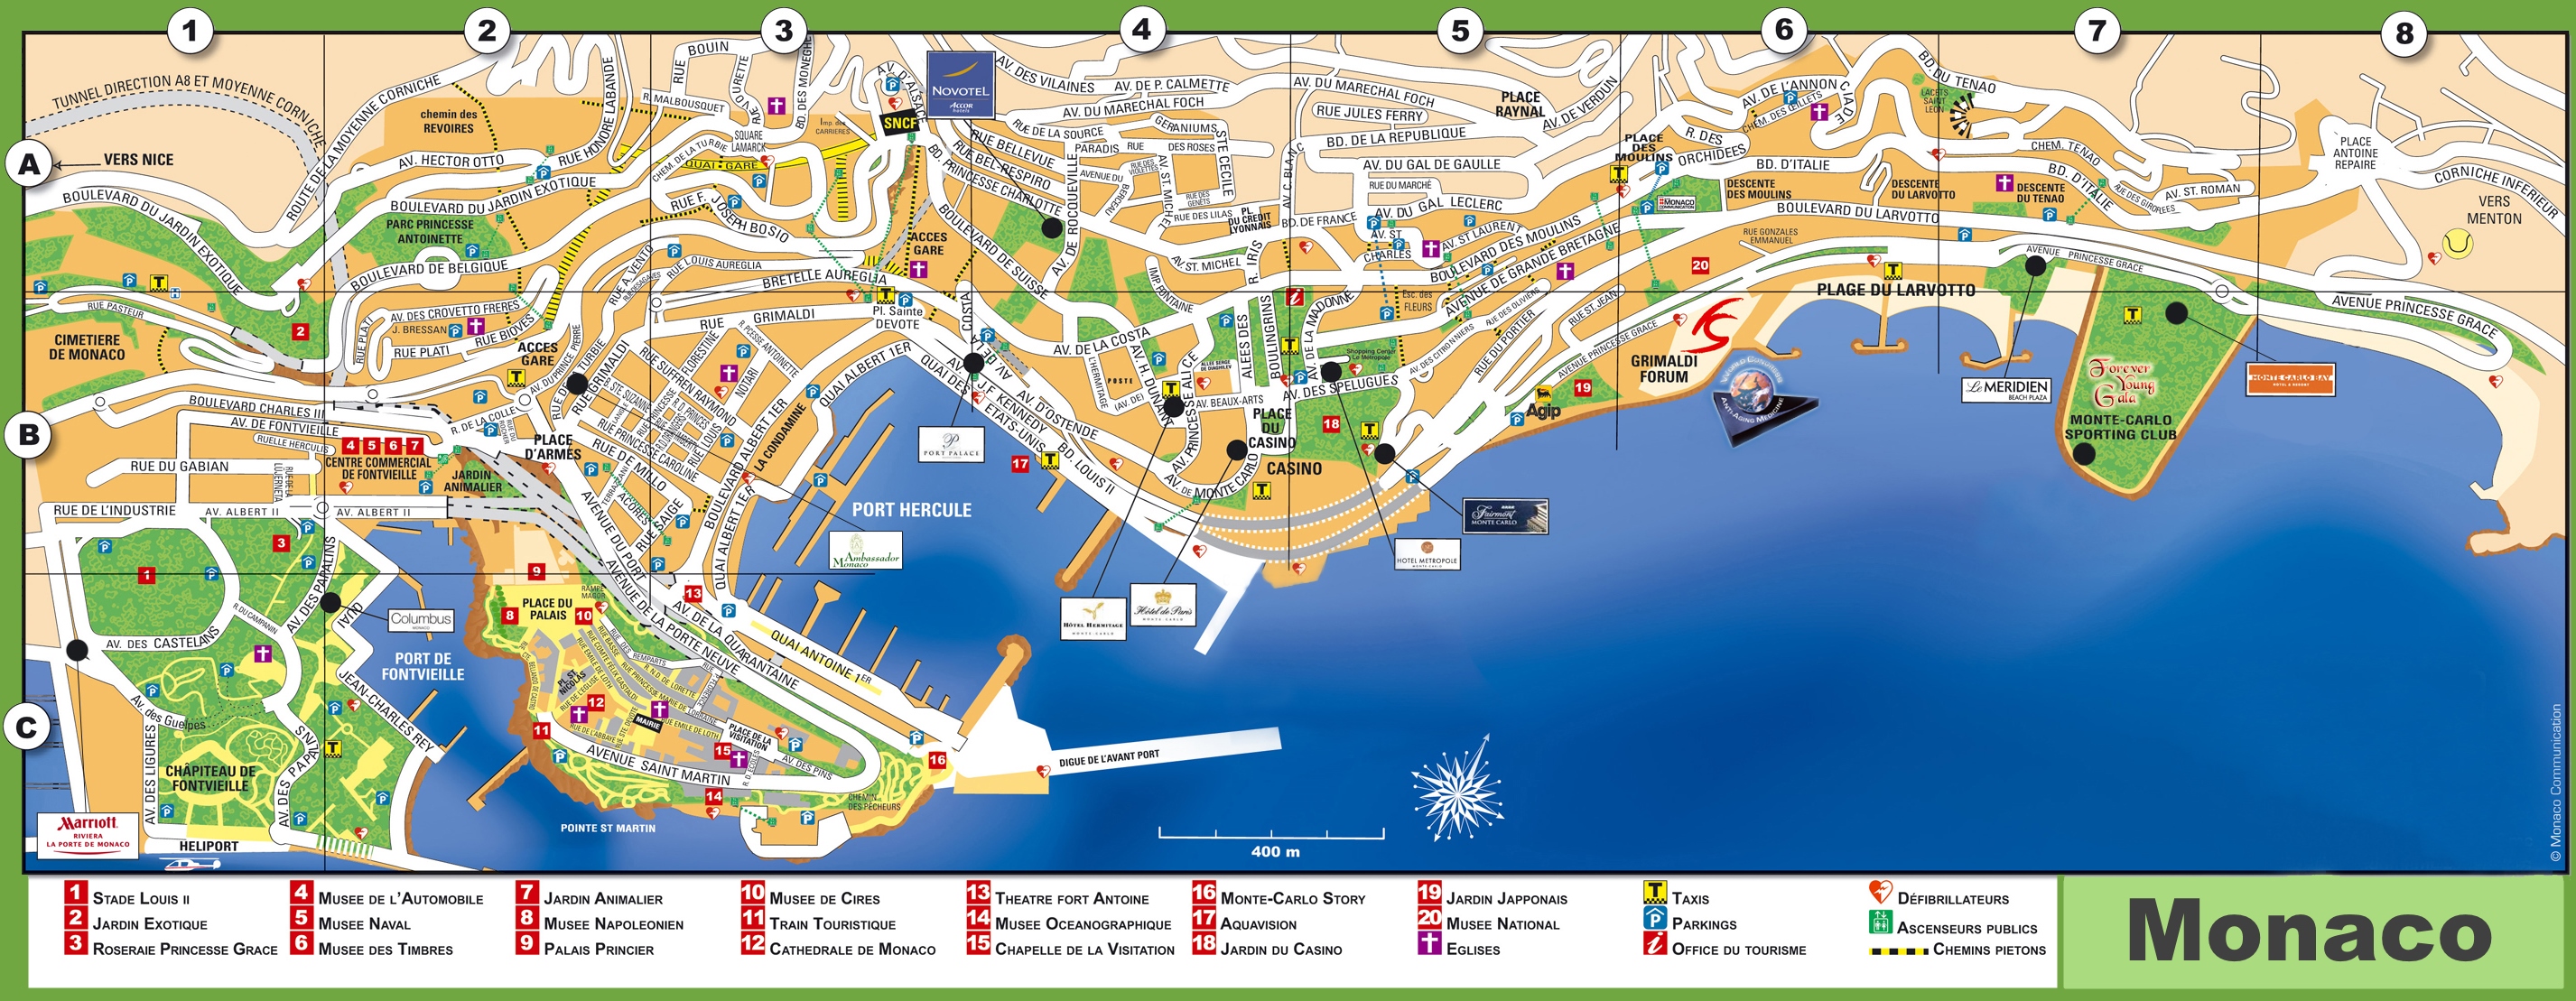 Monaco Hop On Hop Off | Bus Route Map | Combo Deals 2020 - Tripindicator